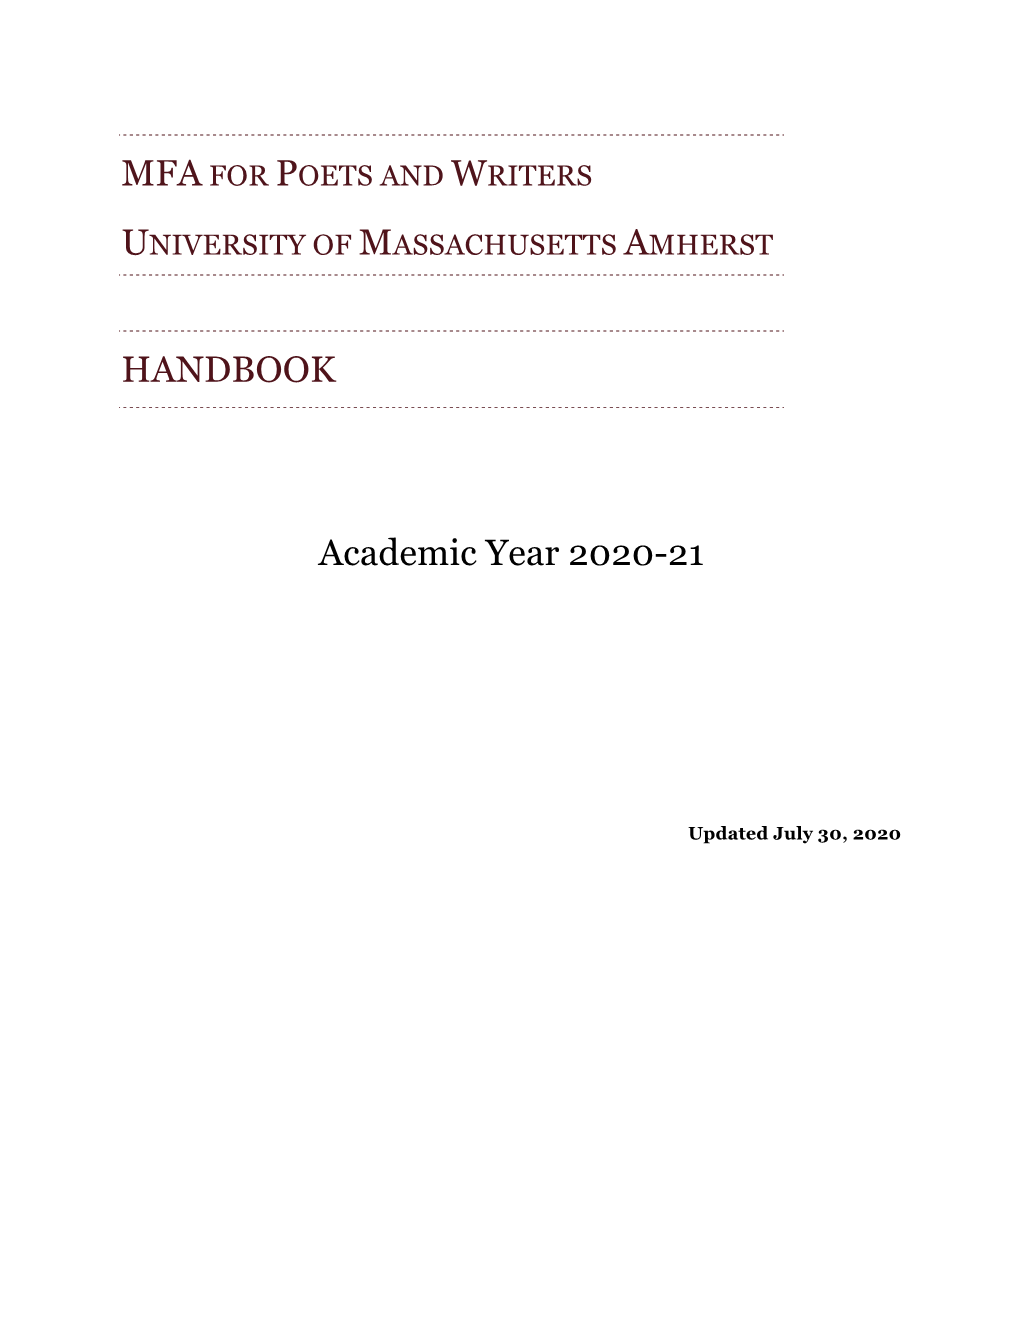 20-21 MFA Handbook (Updated July 2020)